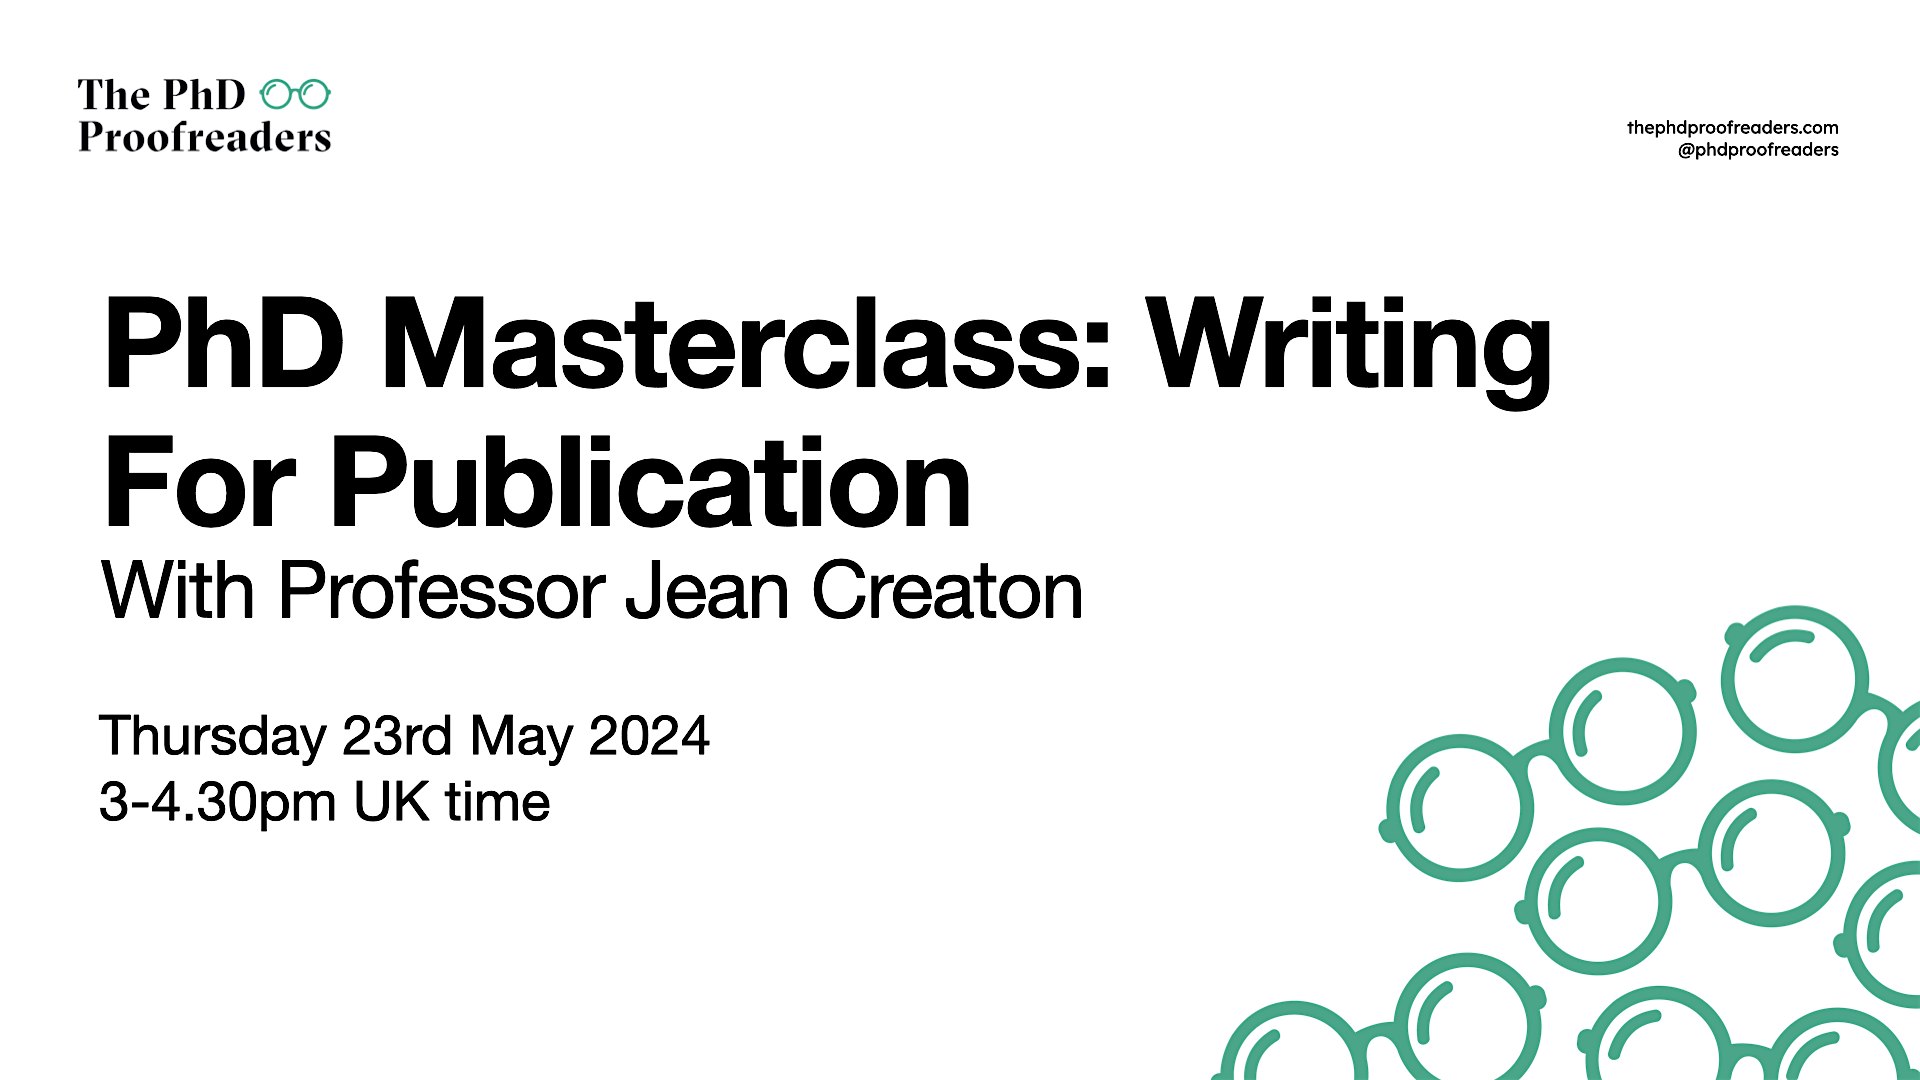 PhD Masterclass: Writing For Publication